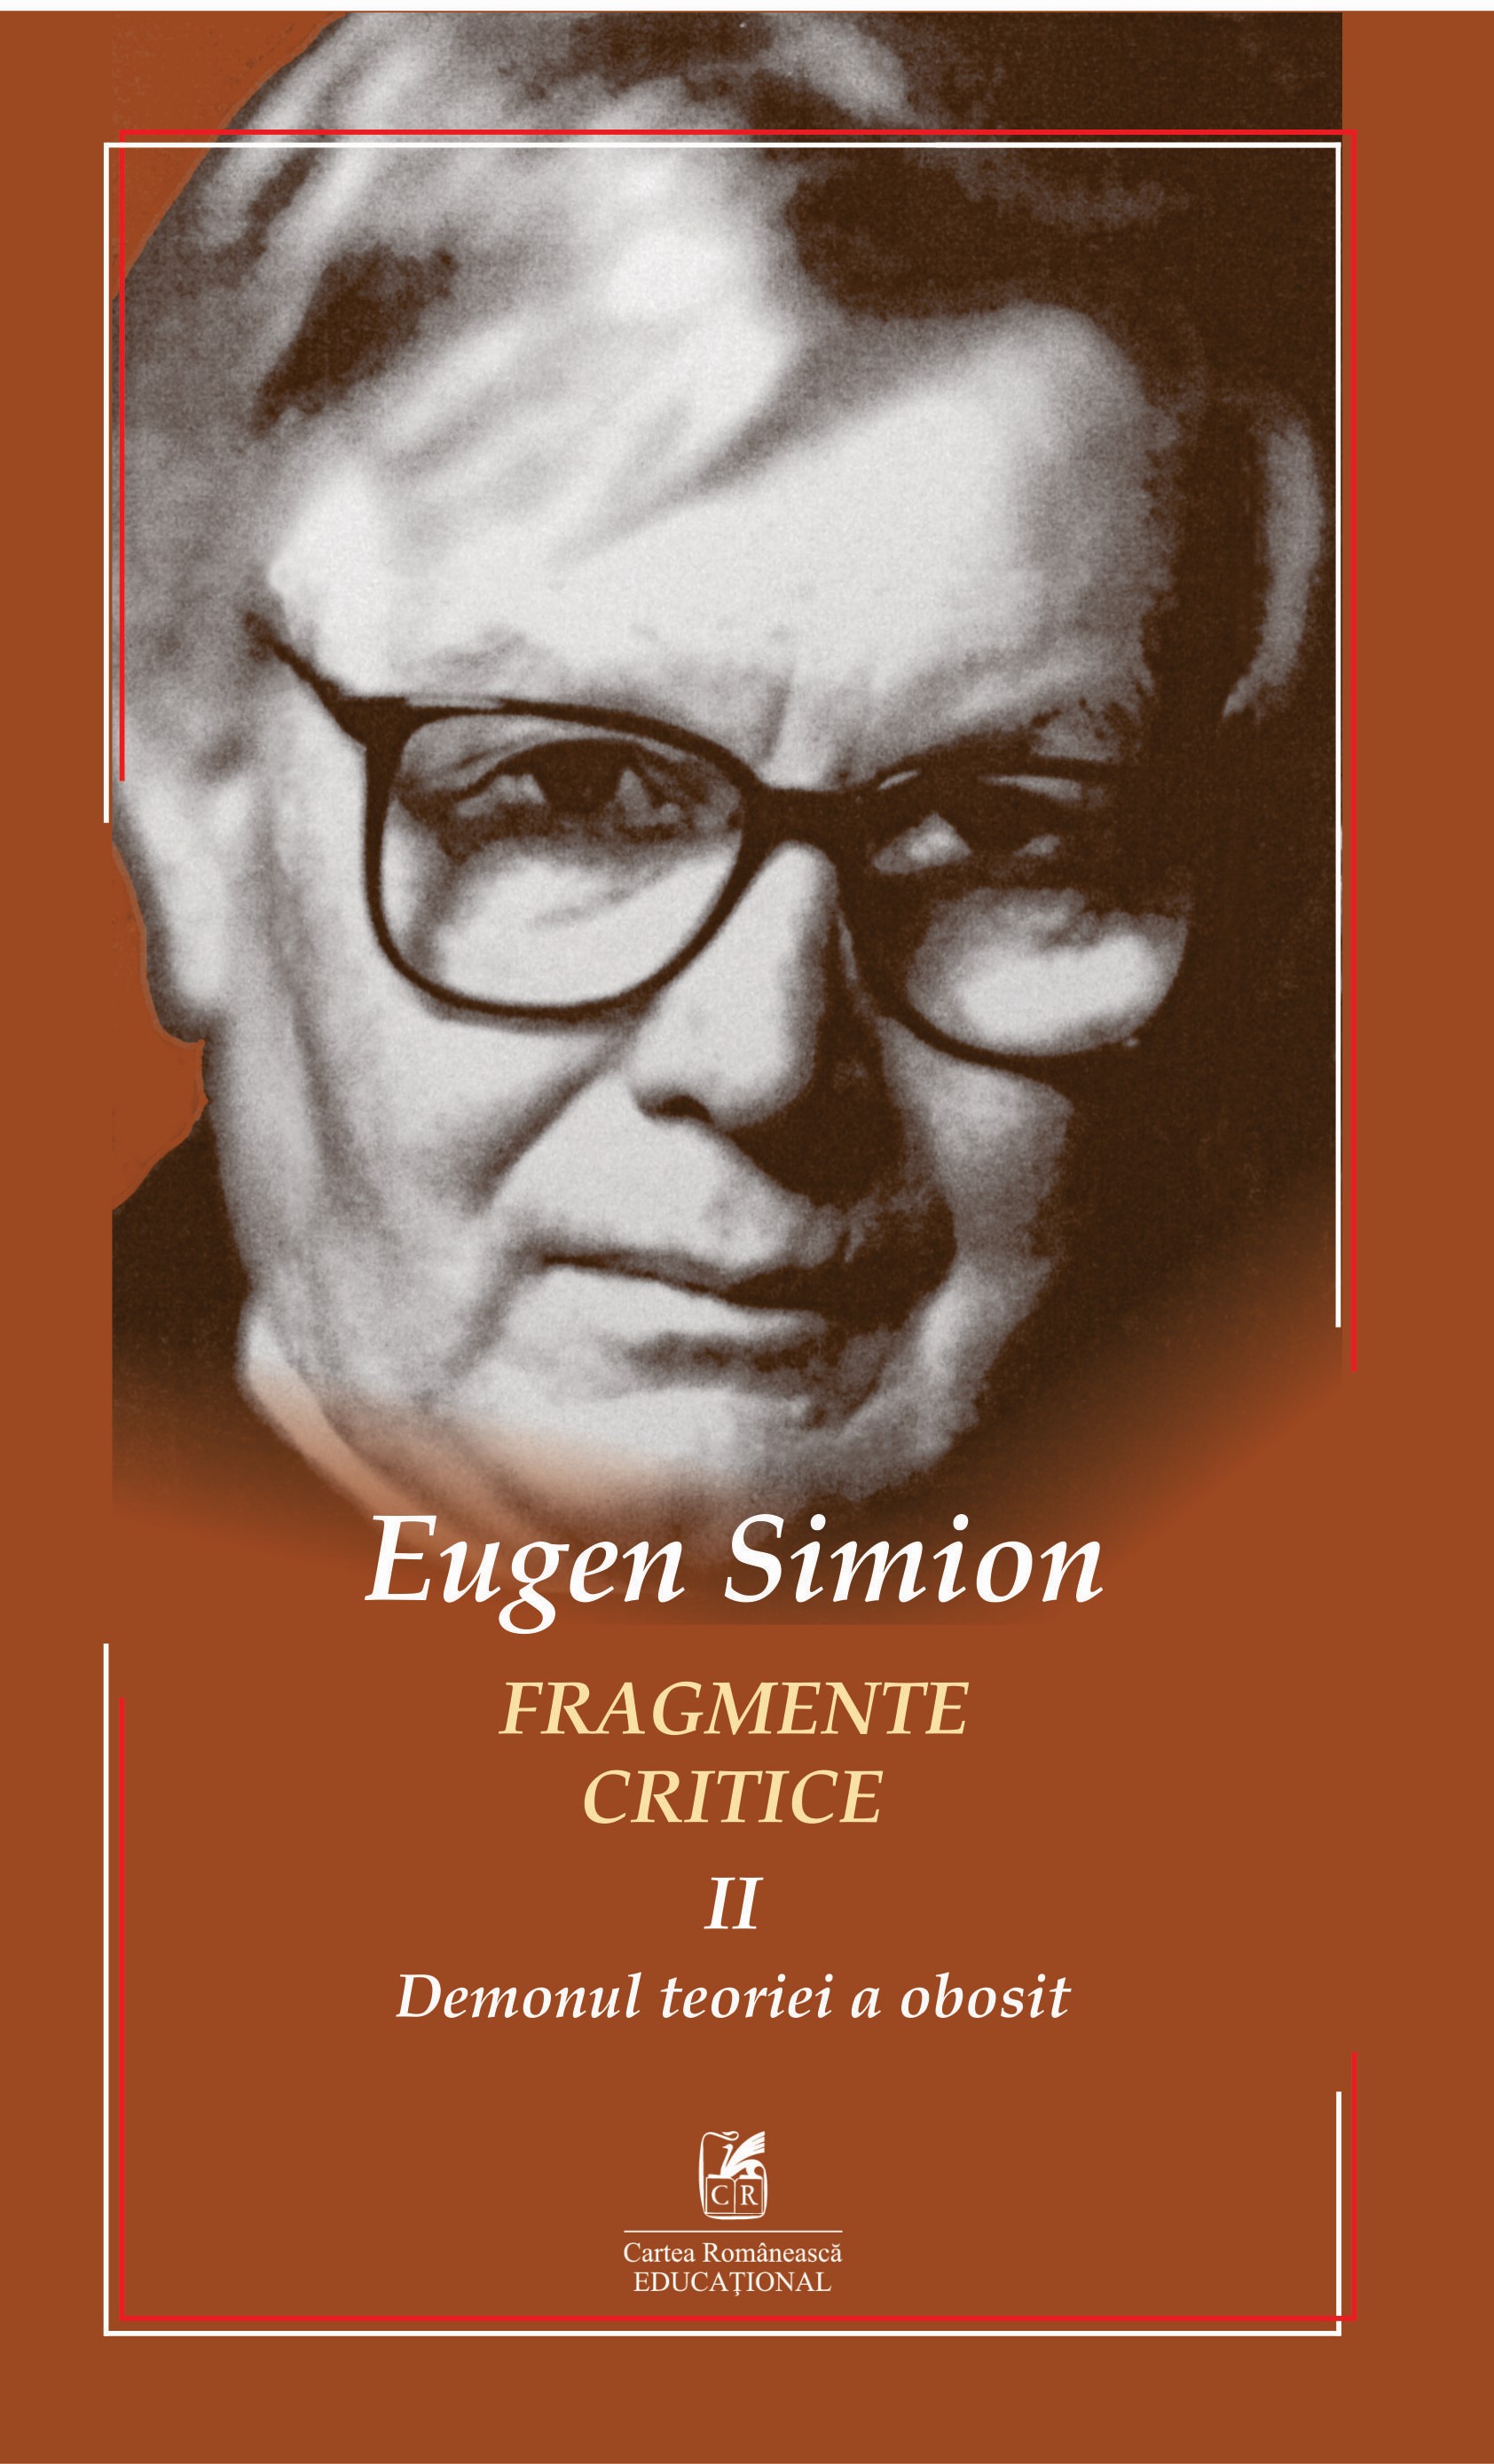 Fragmente critice | Eugen Simion Cartea Romaneasca educational